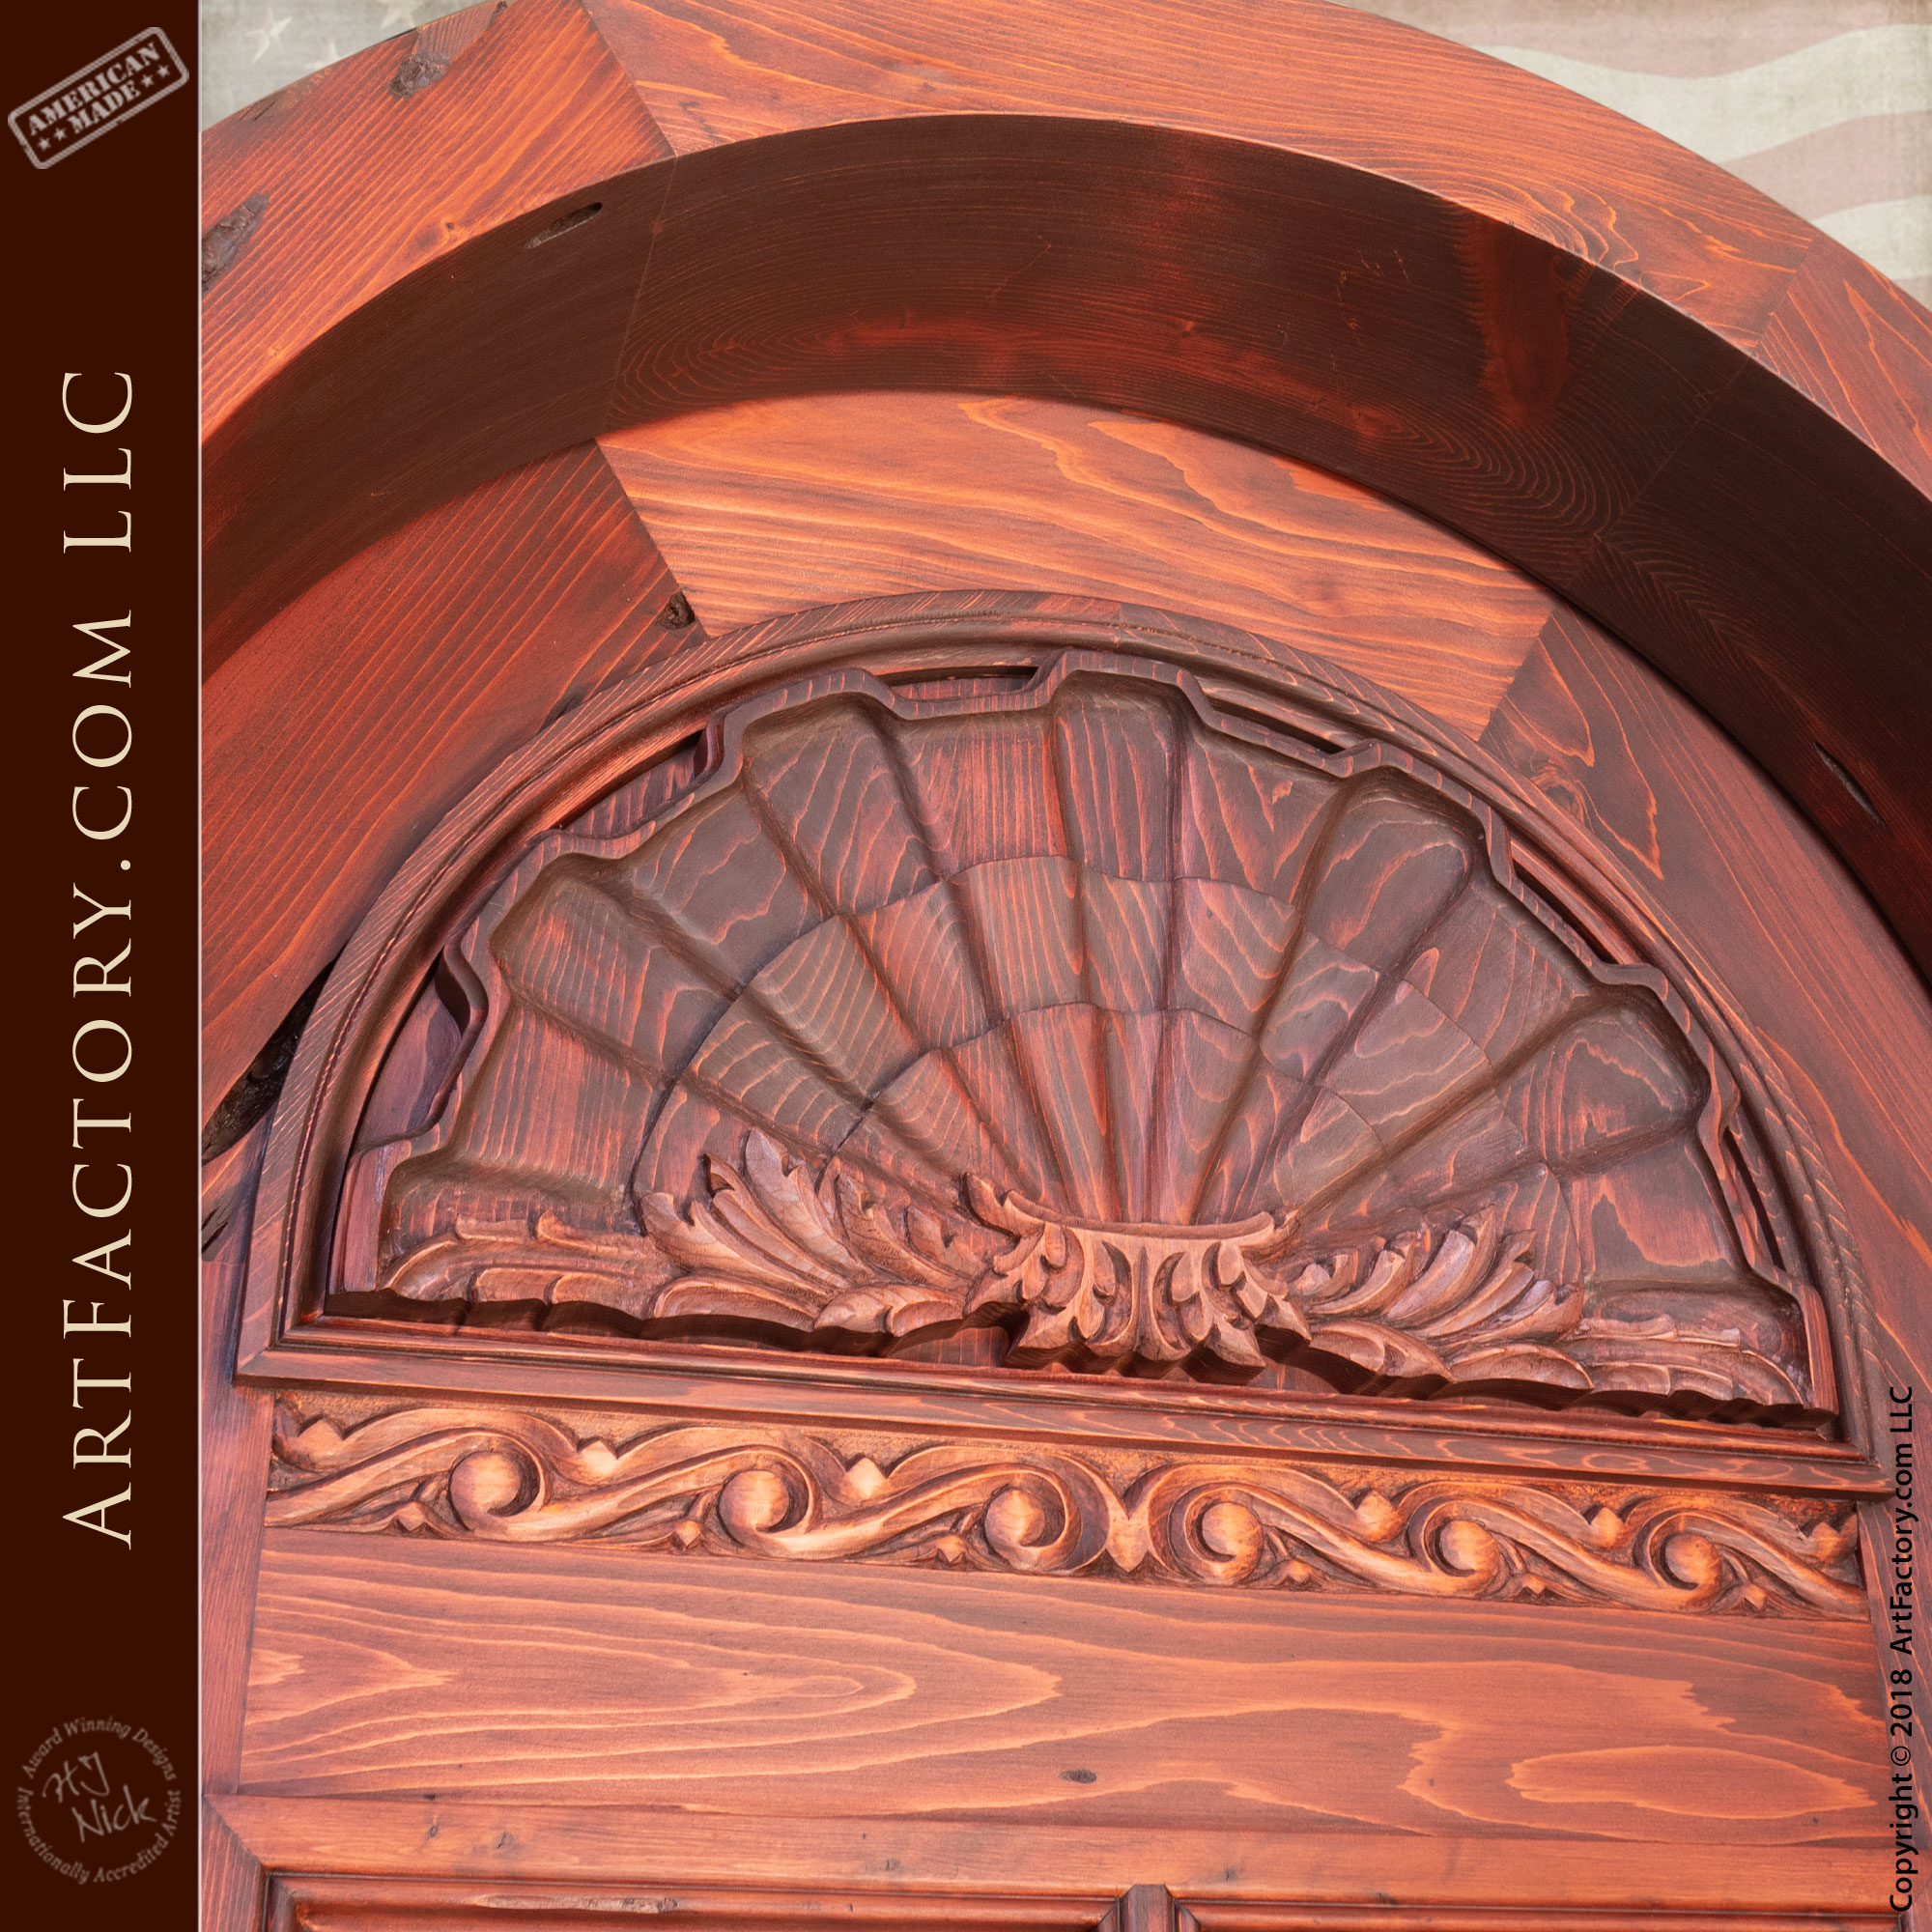 Custom Solid Wooden Lion Knocker Entry Door